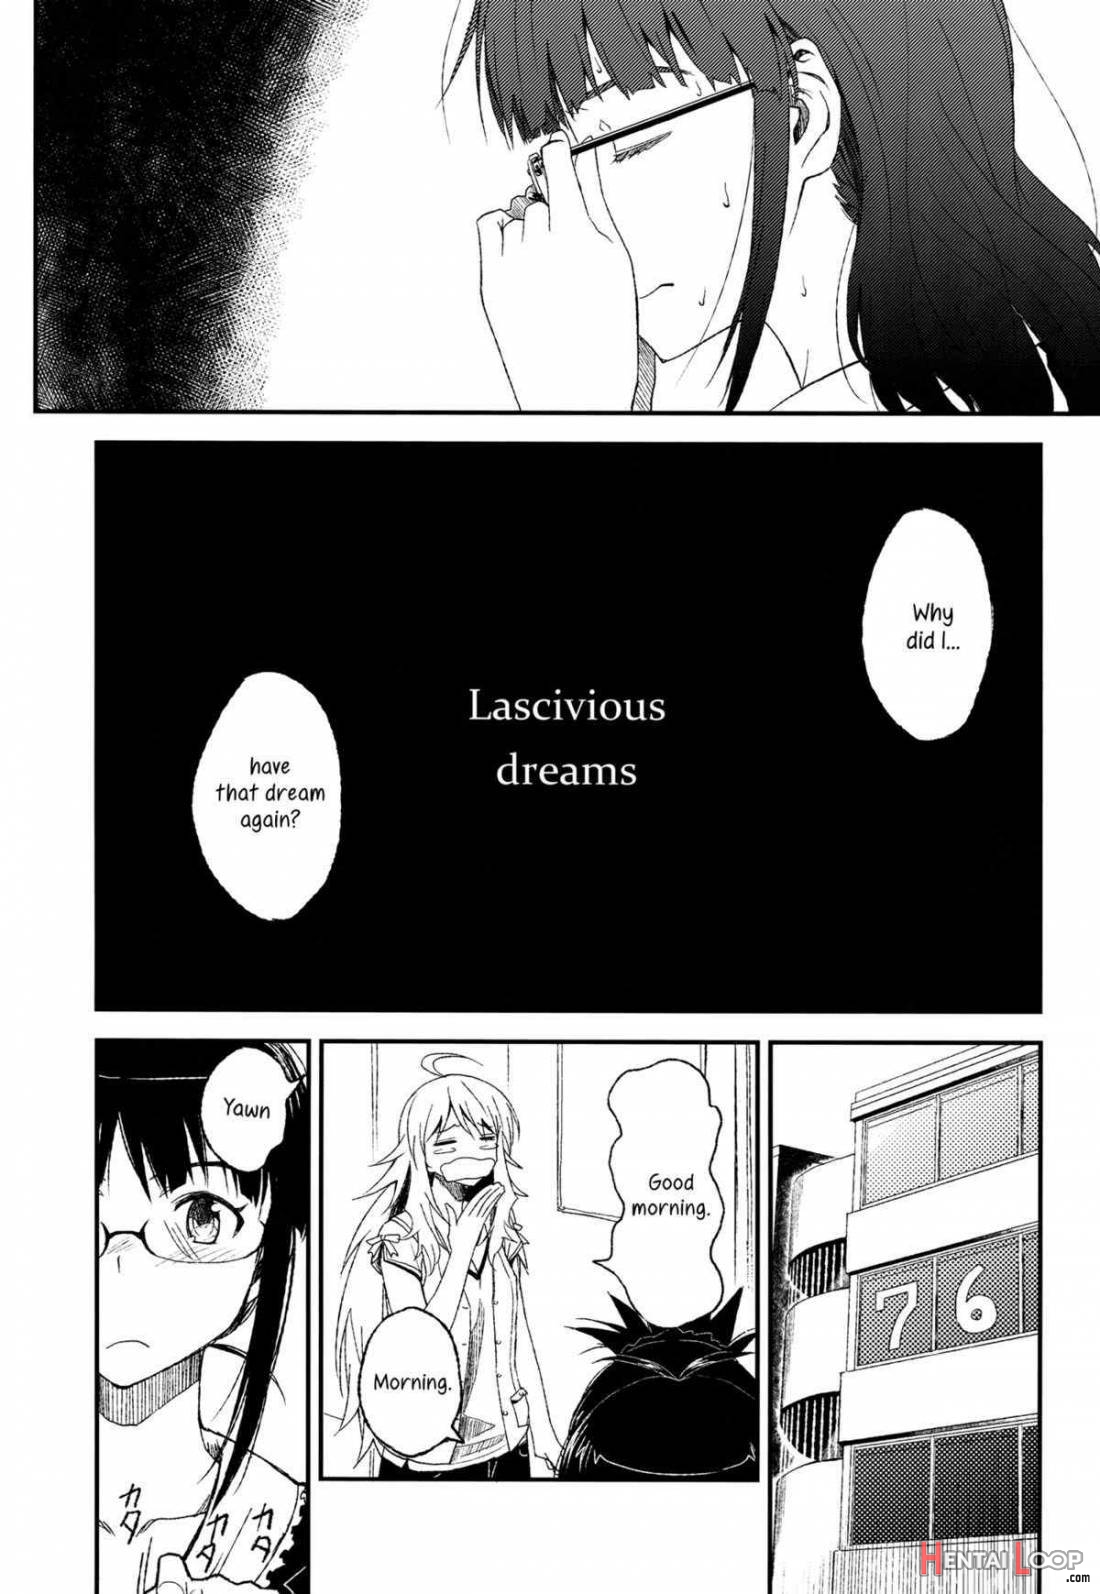 Lascivious Dreams page 4